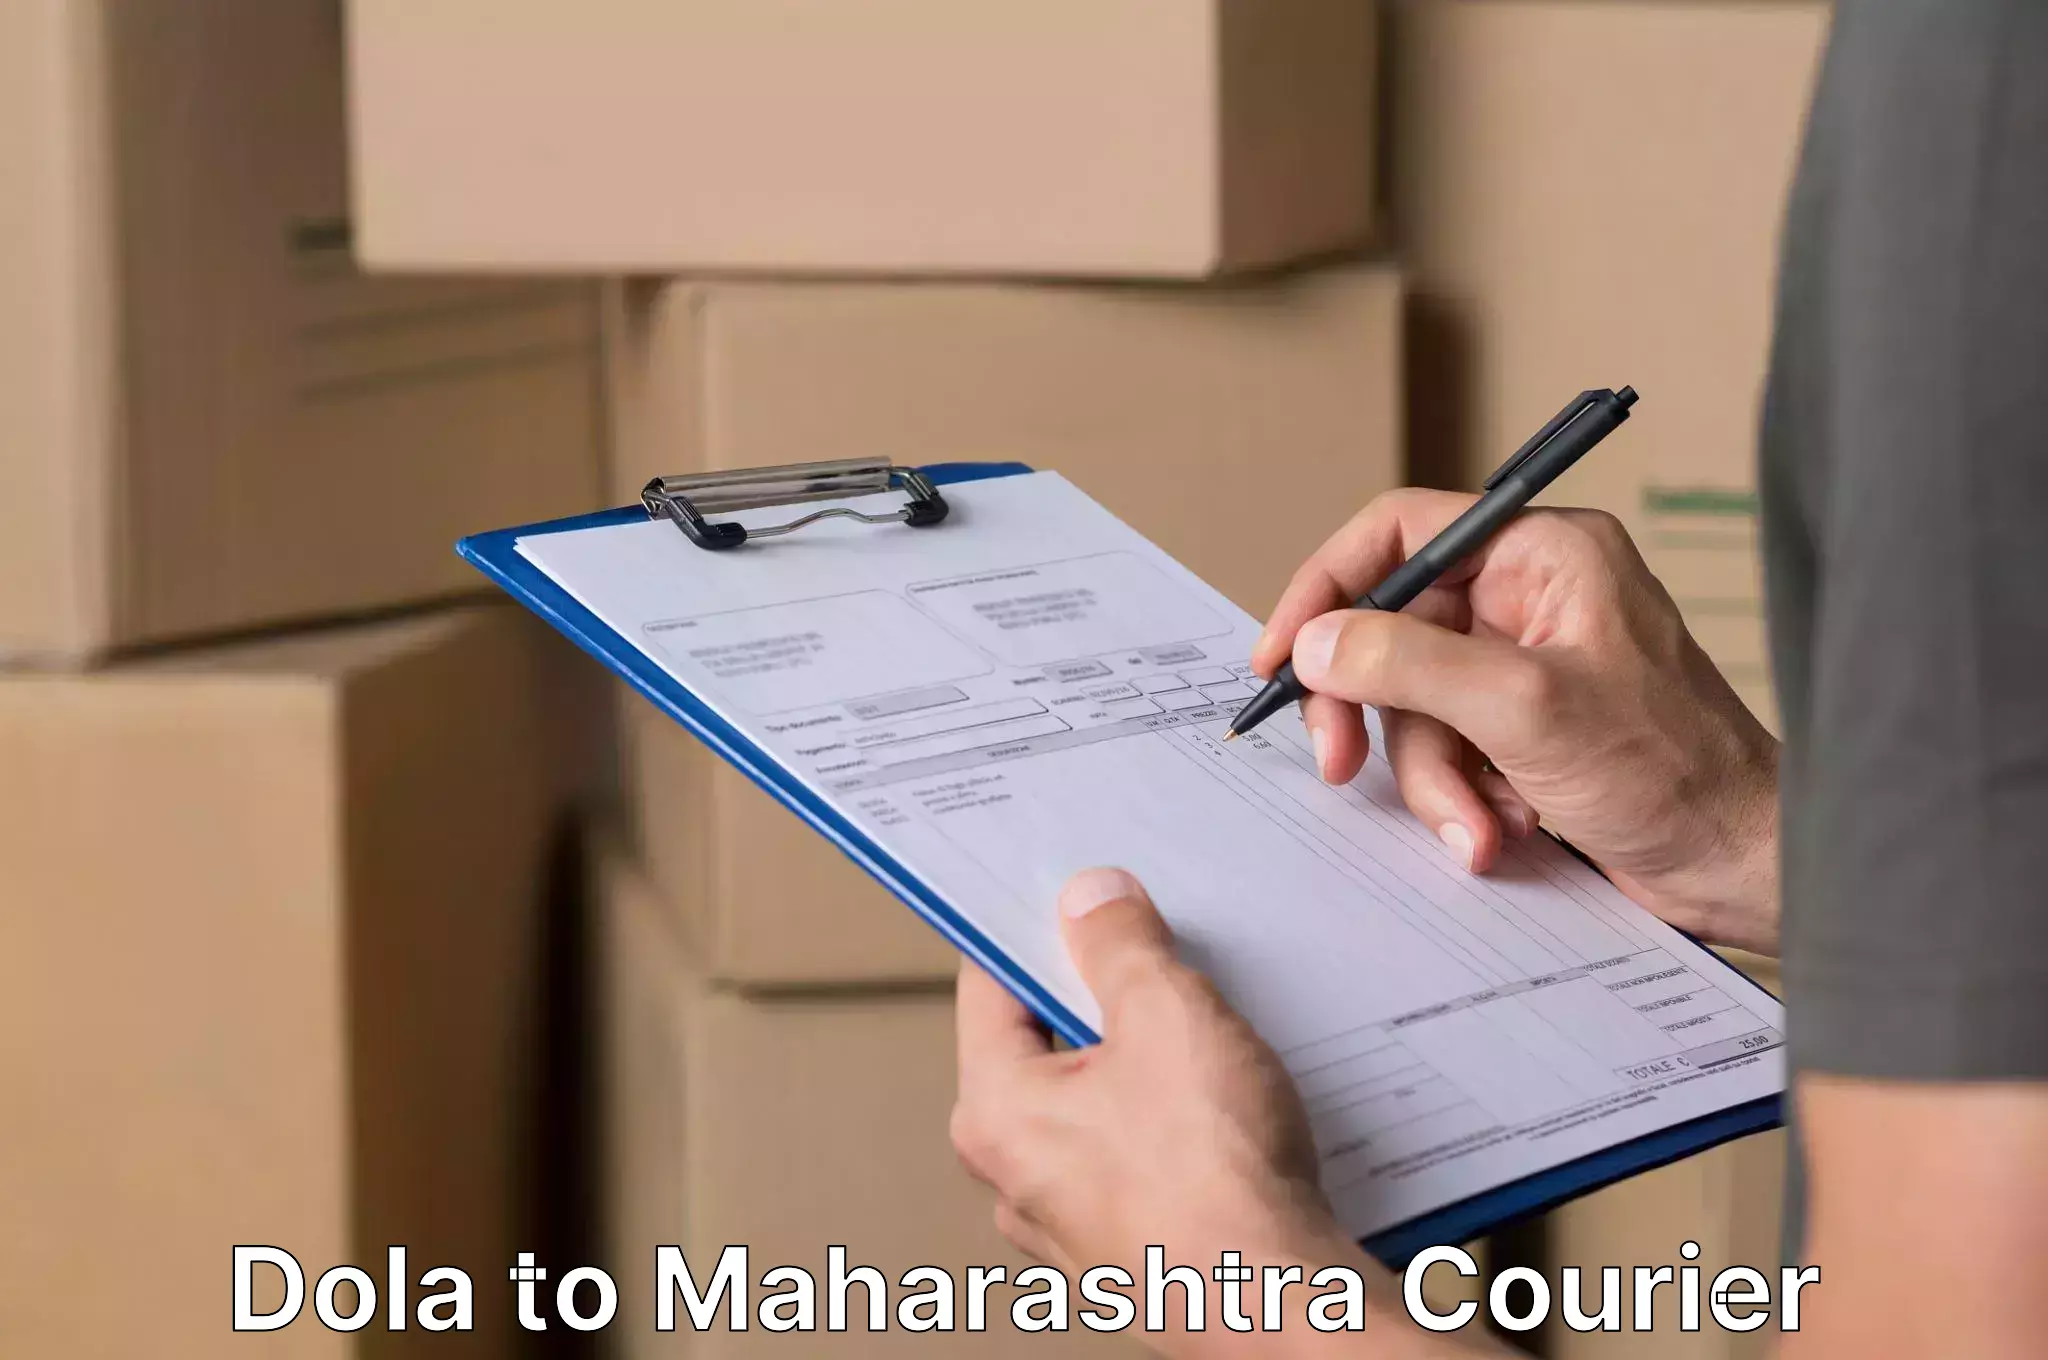 Furniture relocation experts Dola to Maharashtra